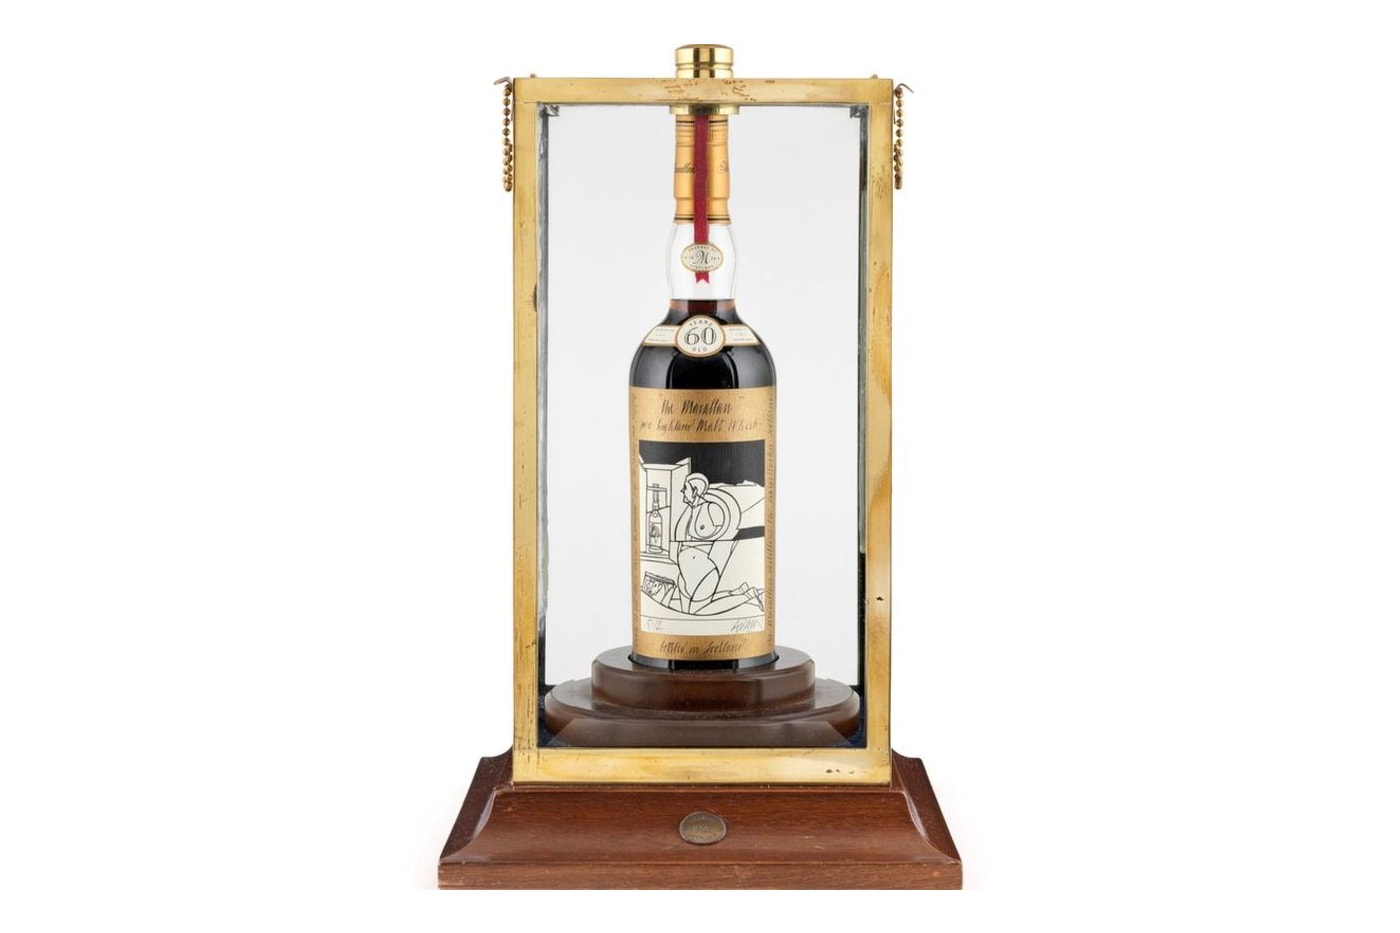 Macallan Valerio Adami bottle auction record price most expensive whiskey bonhams